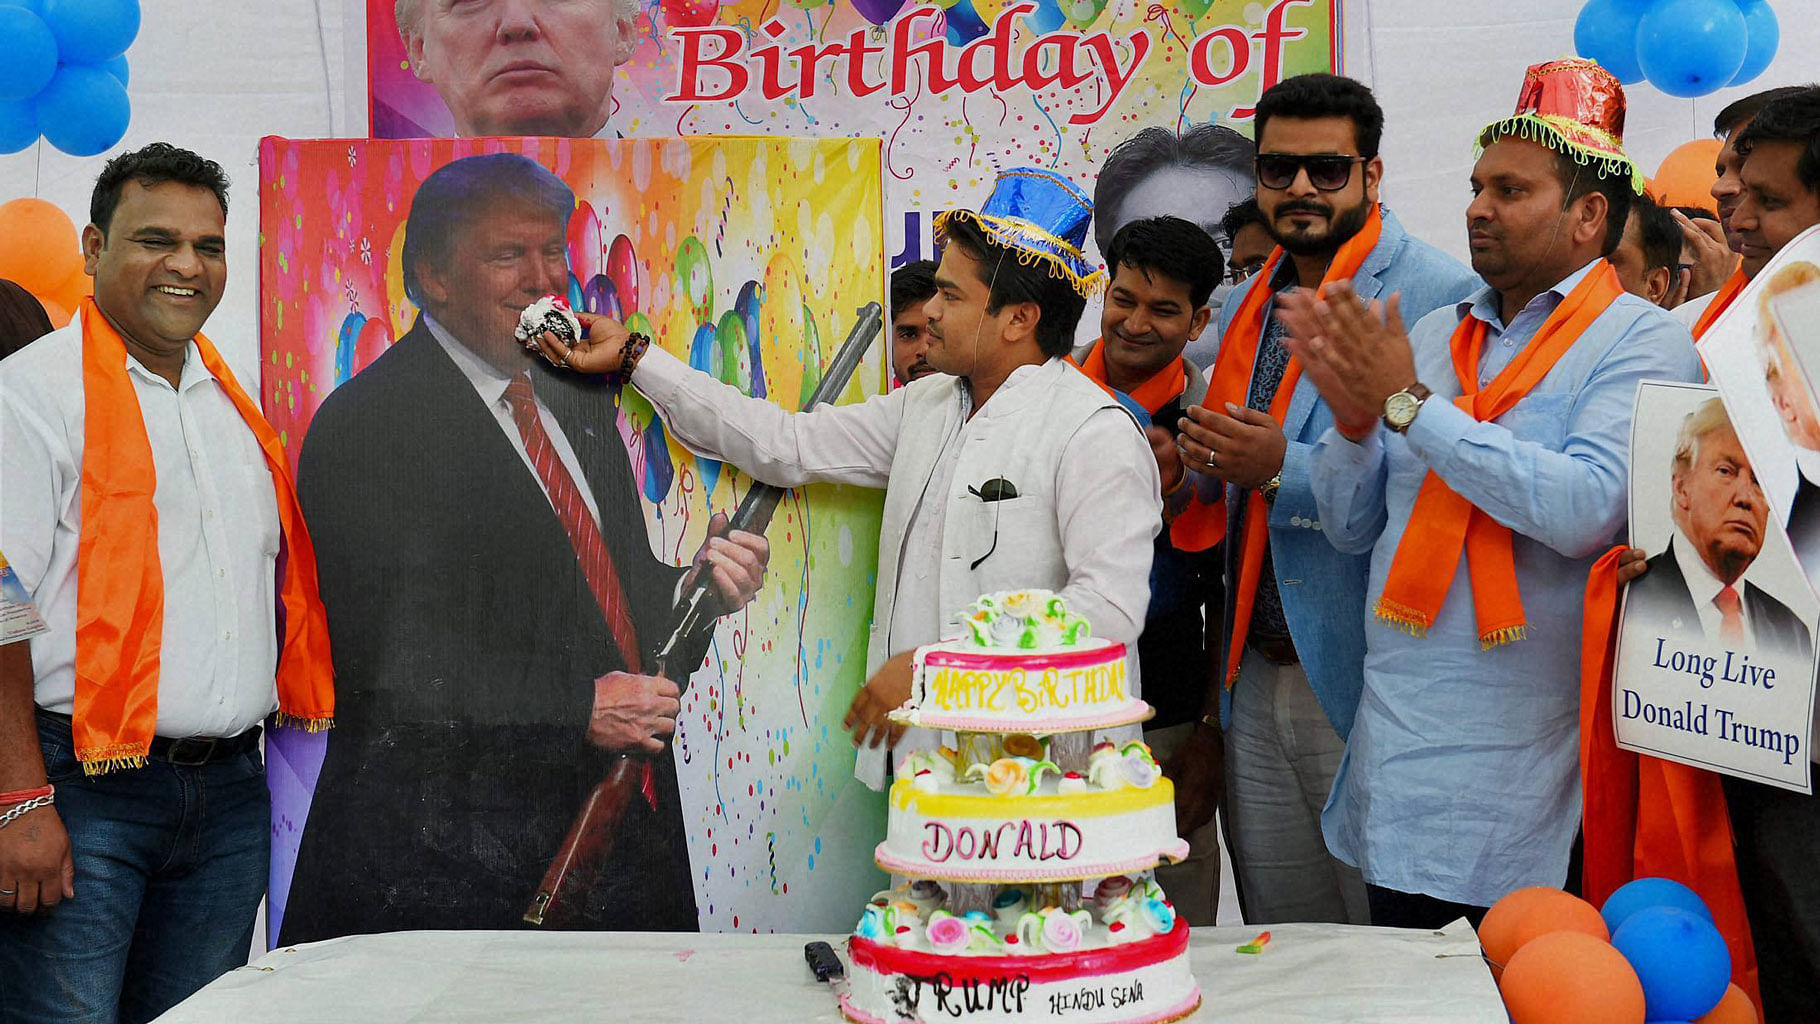 President of Hindu Sena cut the cake to celebrate birthday of Donald Trump. (Photo: PTI)